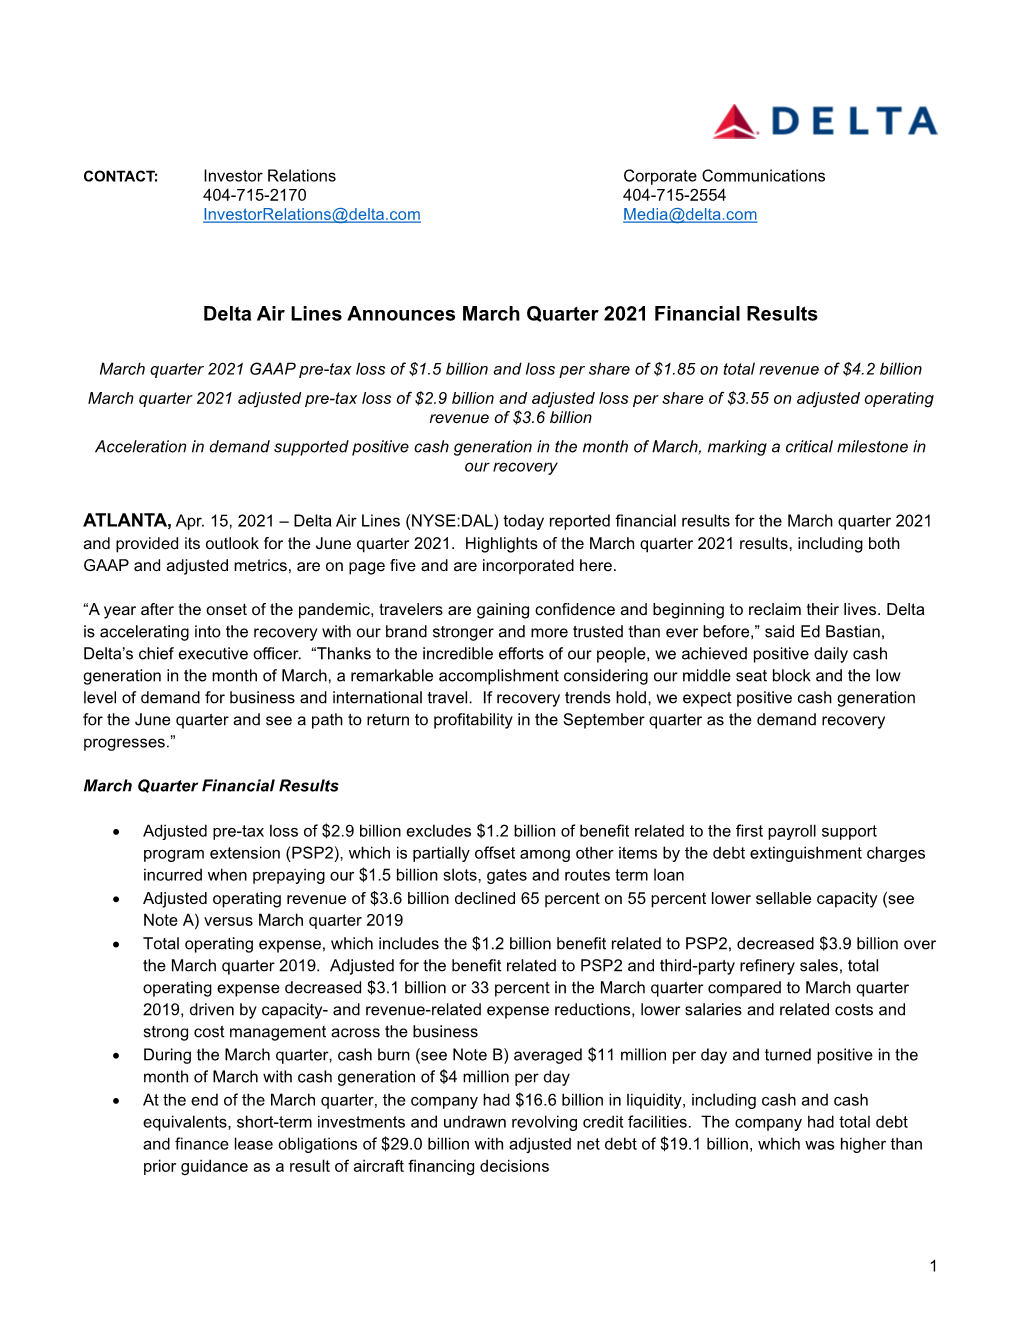 Delta Air Lines March Quarter 2021 Financial Results